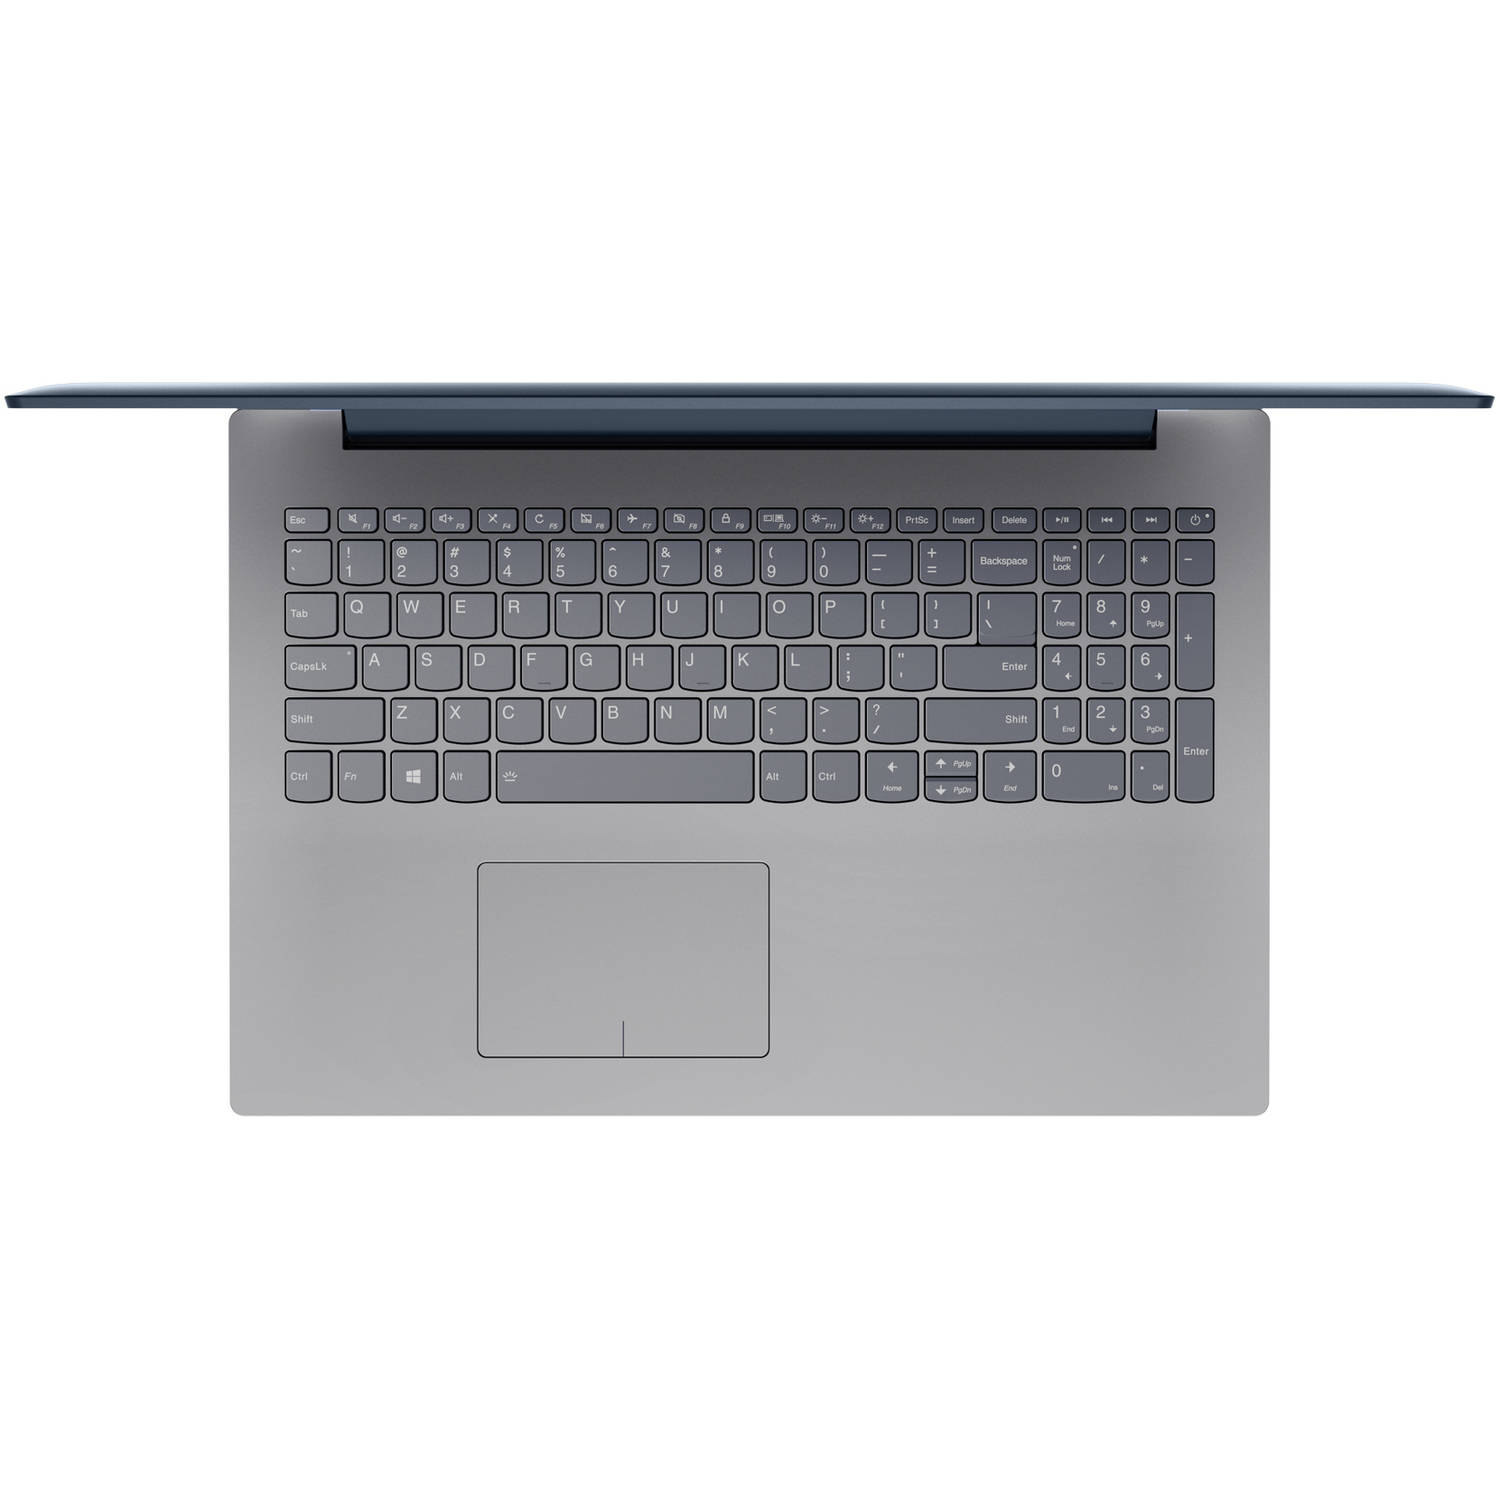 Lenovo ideapad 320 15.6" Laptop, Windows 10, AMD A9-9420 Dual-Core Processor, 4GB RAM, 1TB Hard Drive - Denim Blue - image 5 of 11